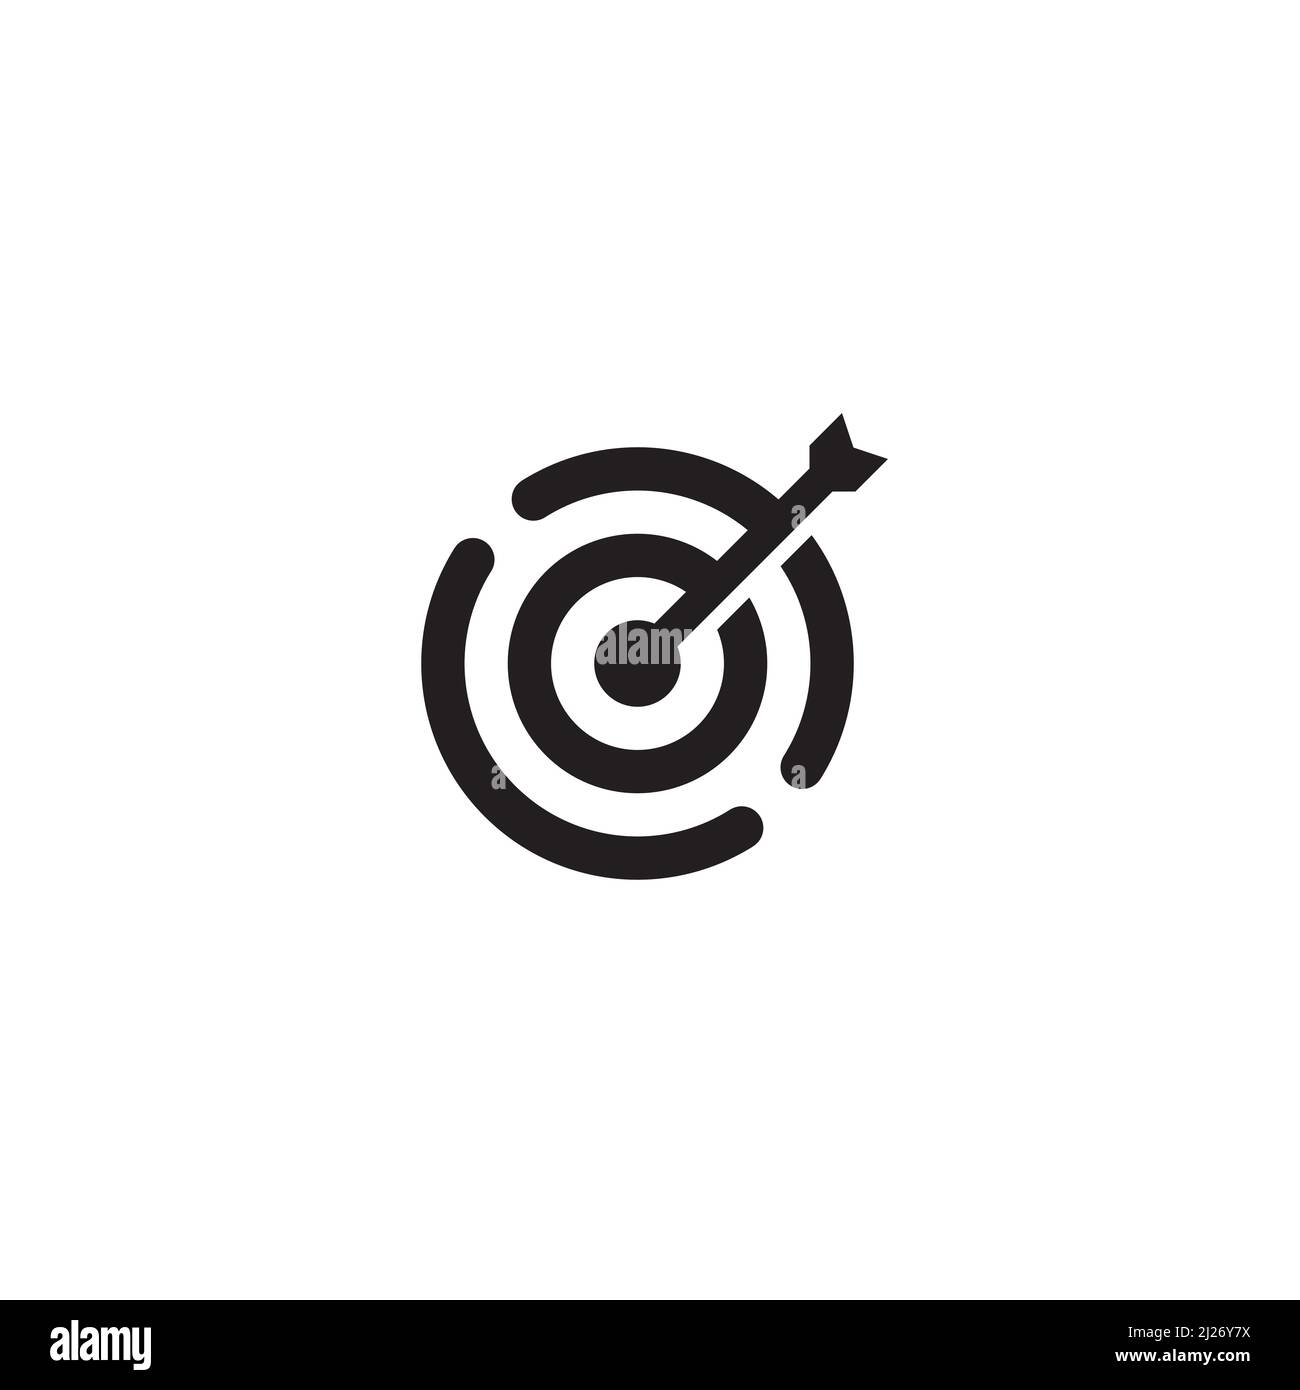 Arrow on Target logo or icon design Stock Vector